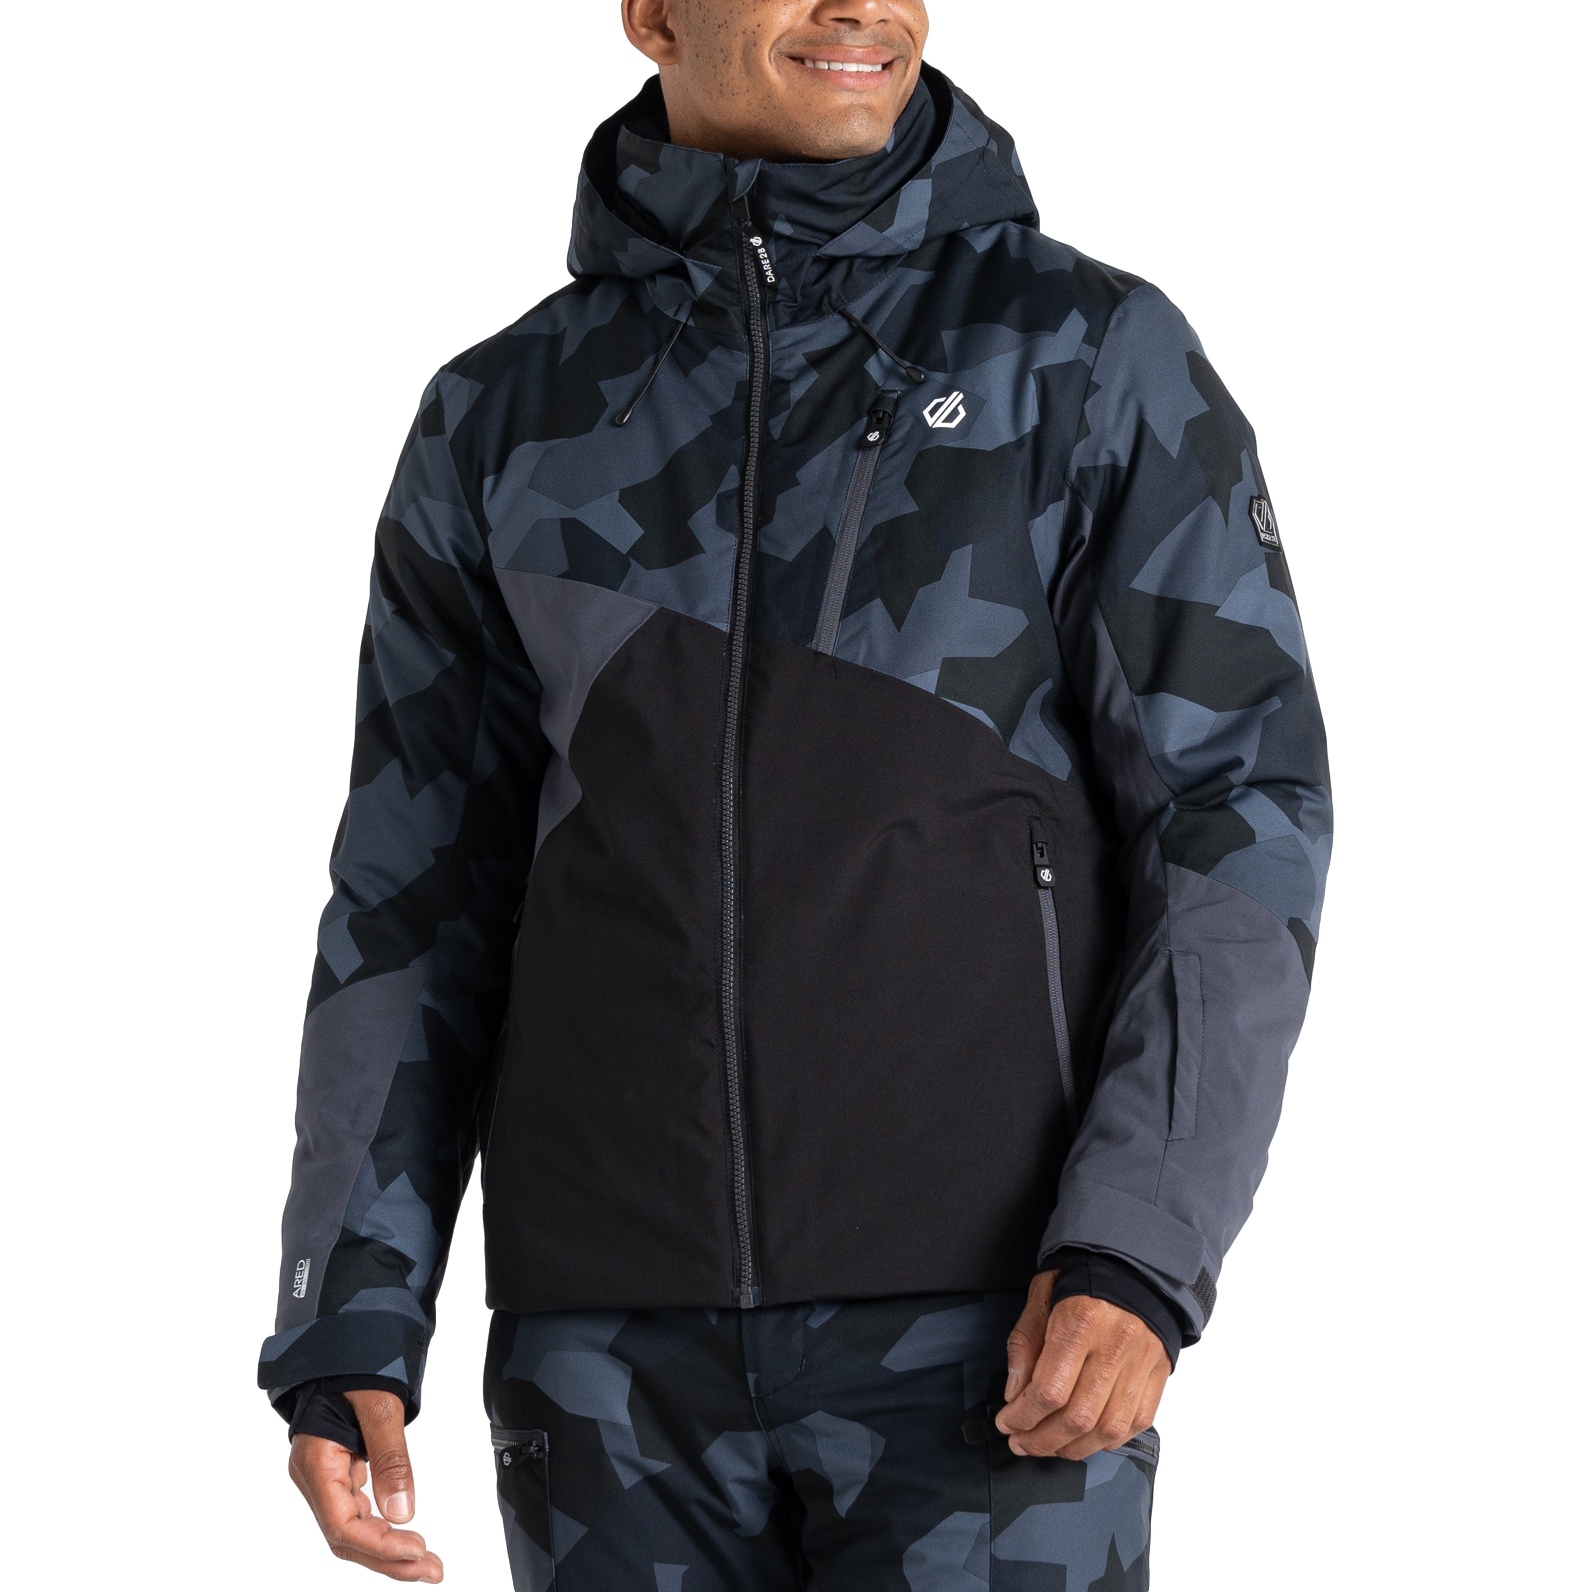 Picture of Dare 2b Baseplate Ski Jacket - DKT Ebony Grey/Black Geo Camo Print